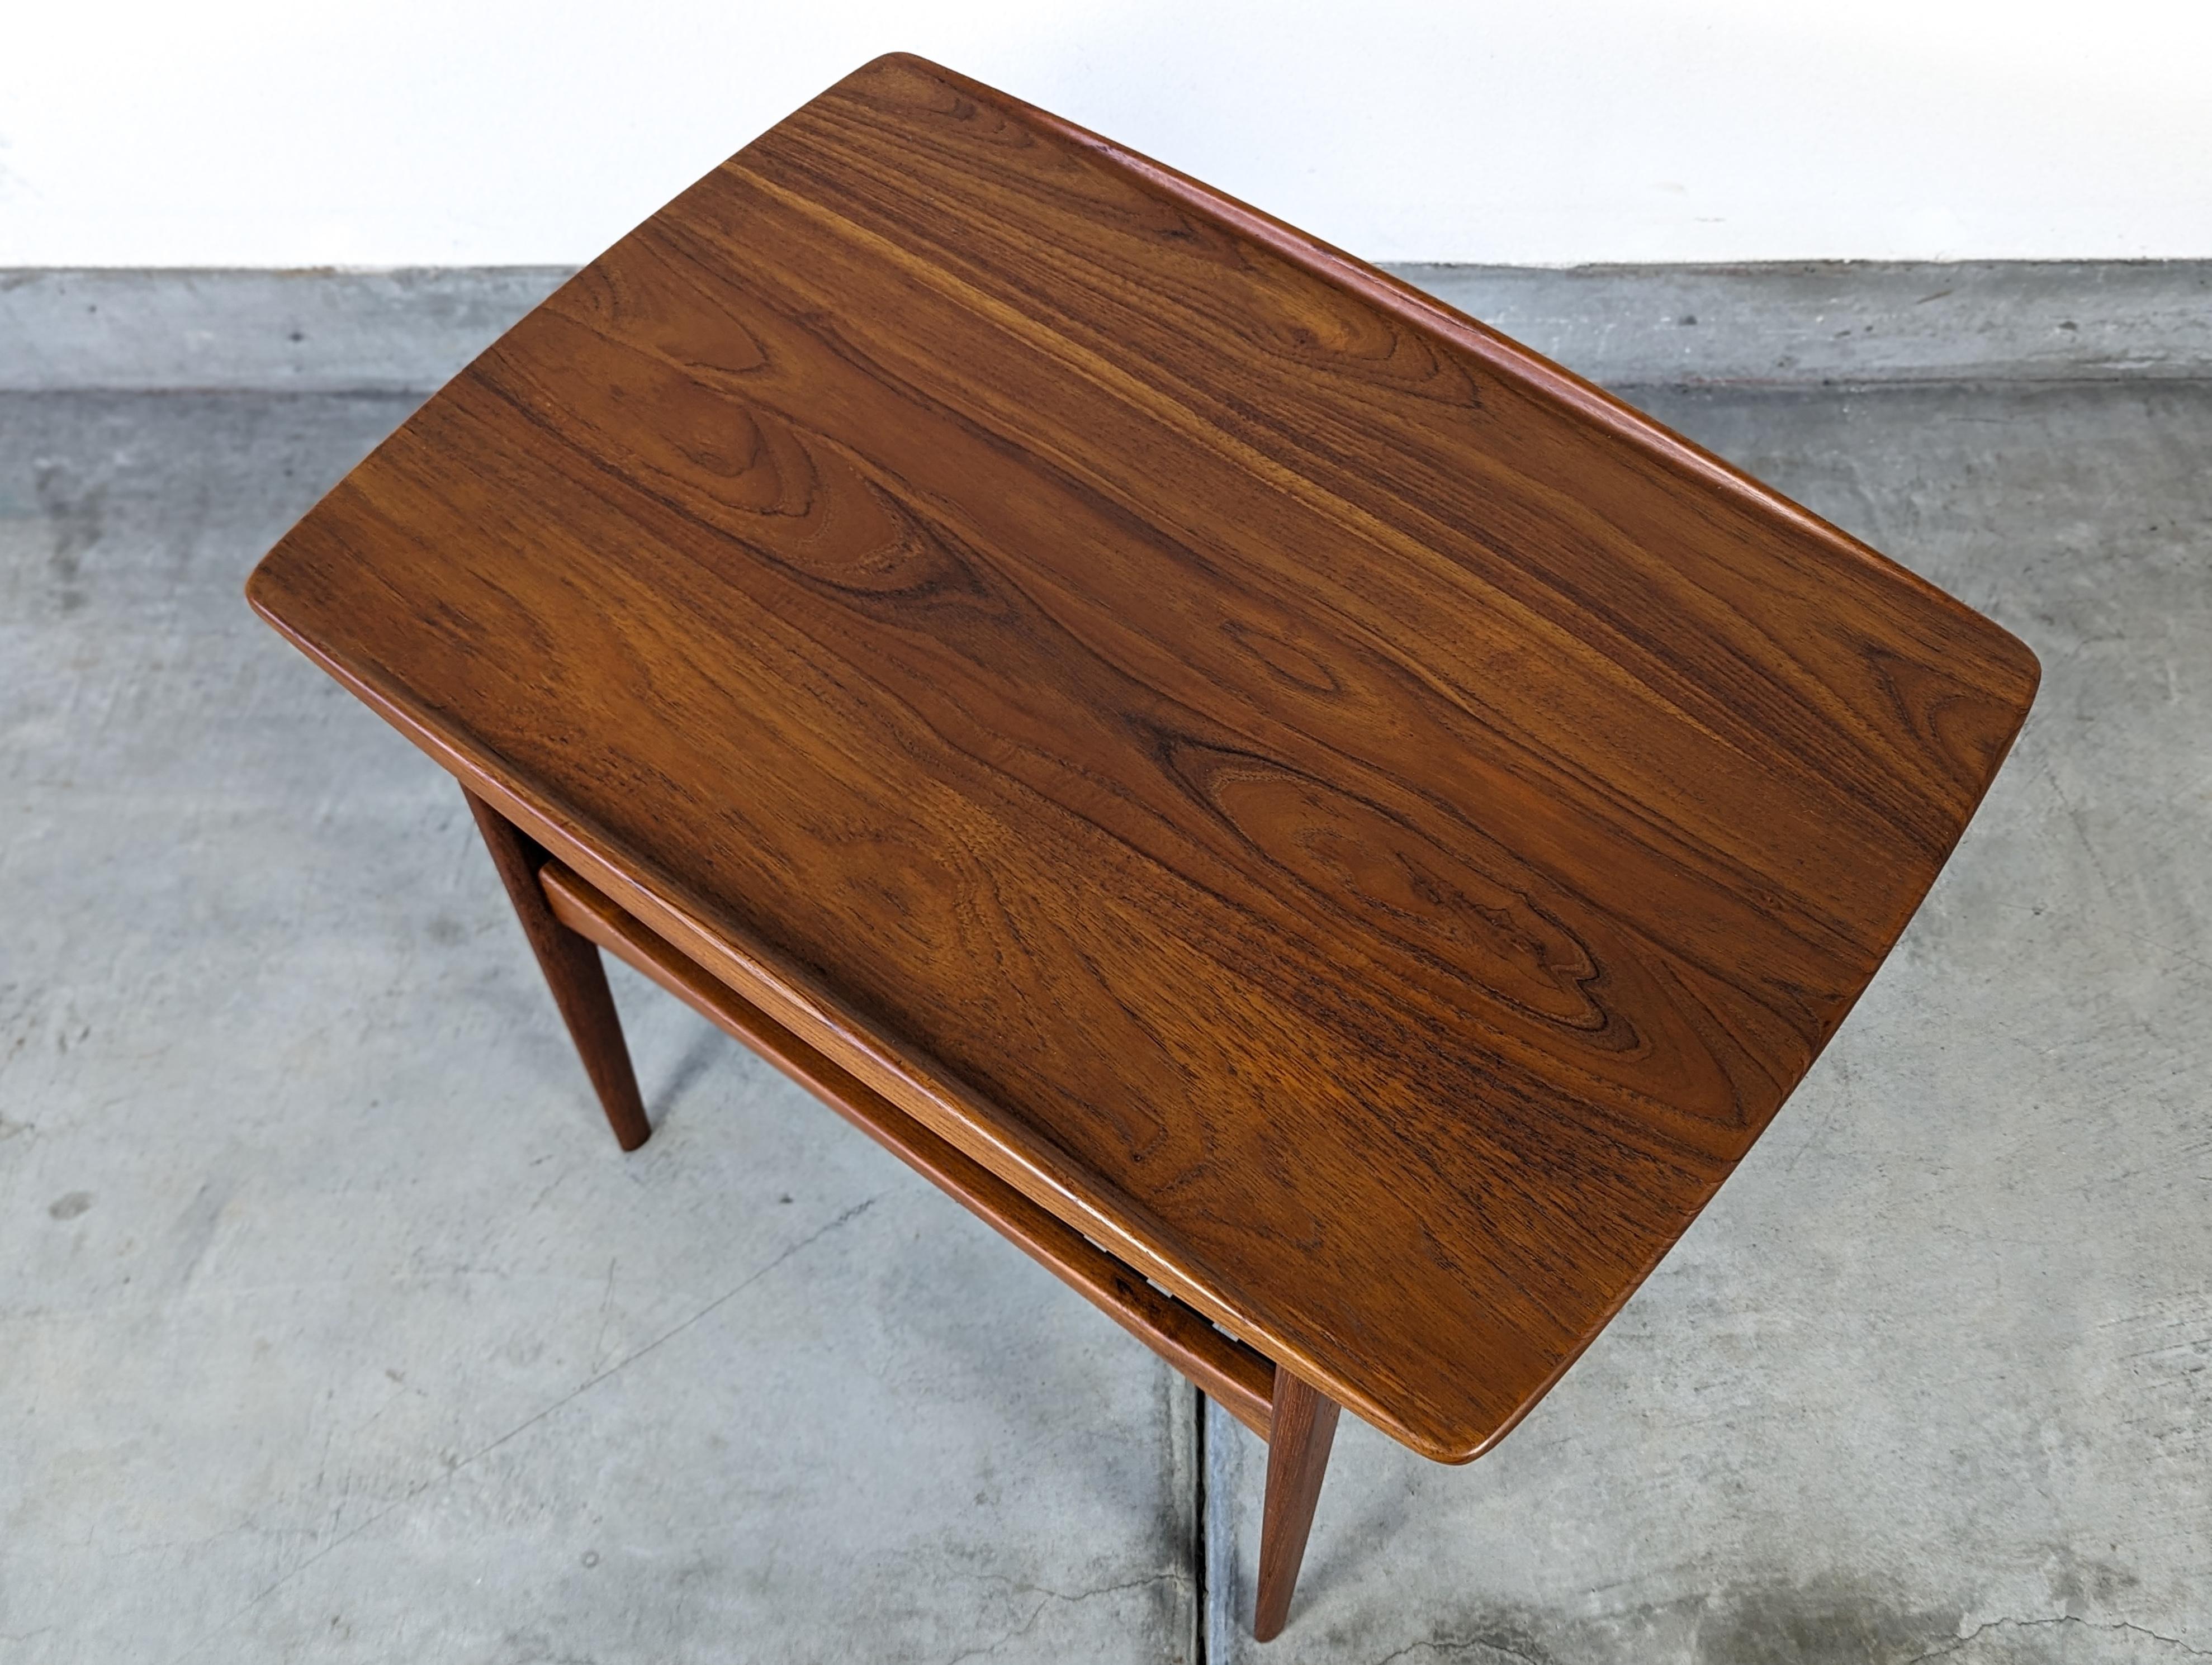 Danish Solid Teak Mid Century Side Table by Finn Juhl for France & Søn, c1950s For Sale 3